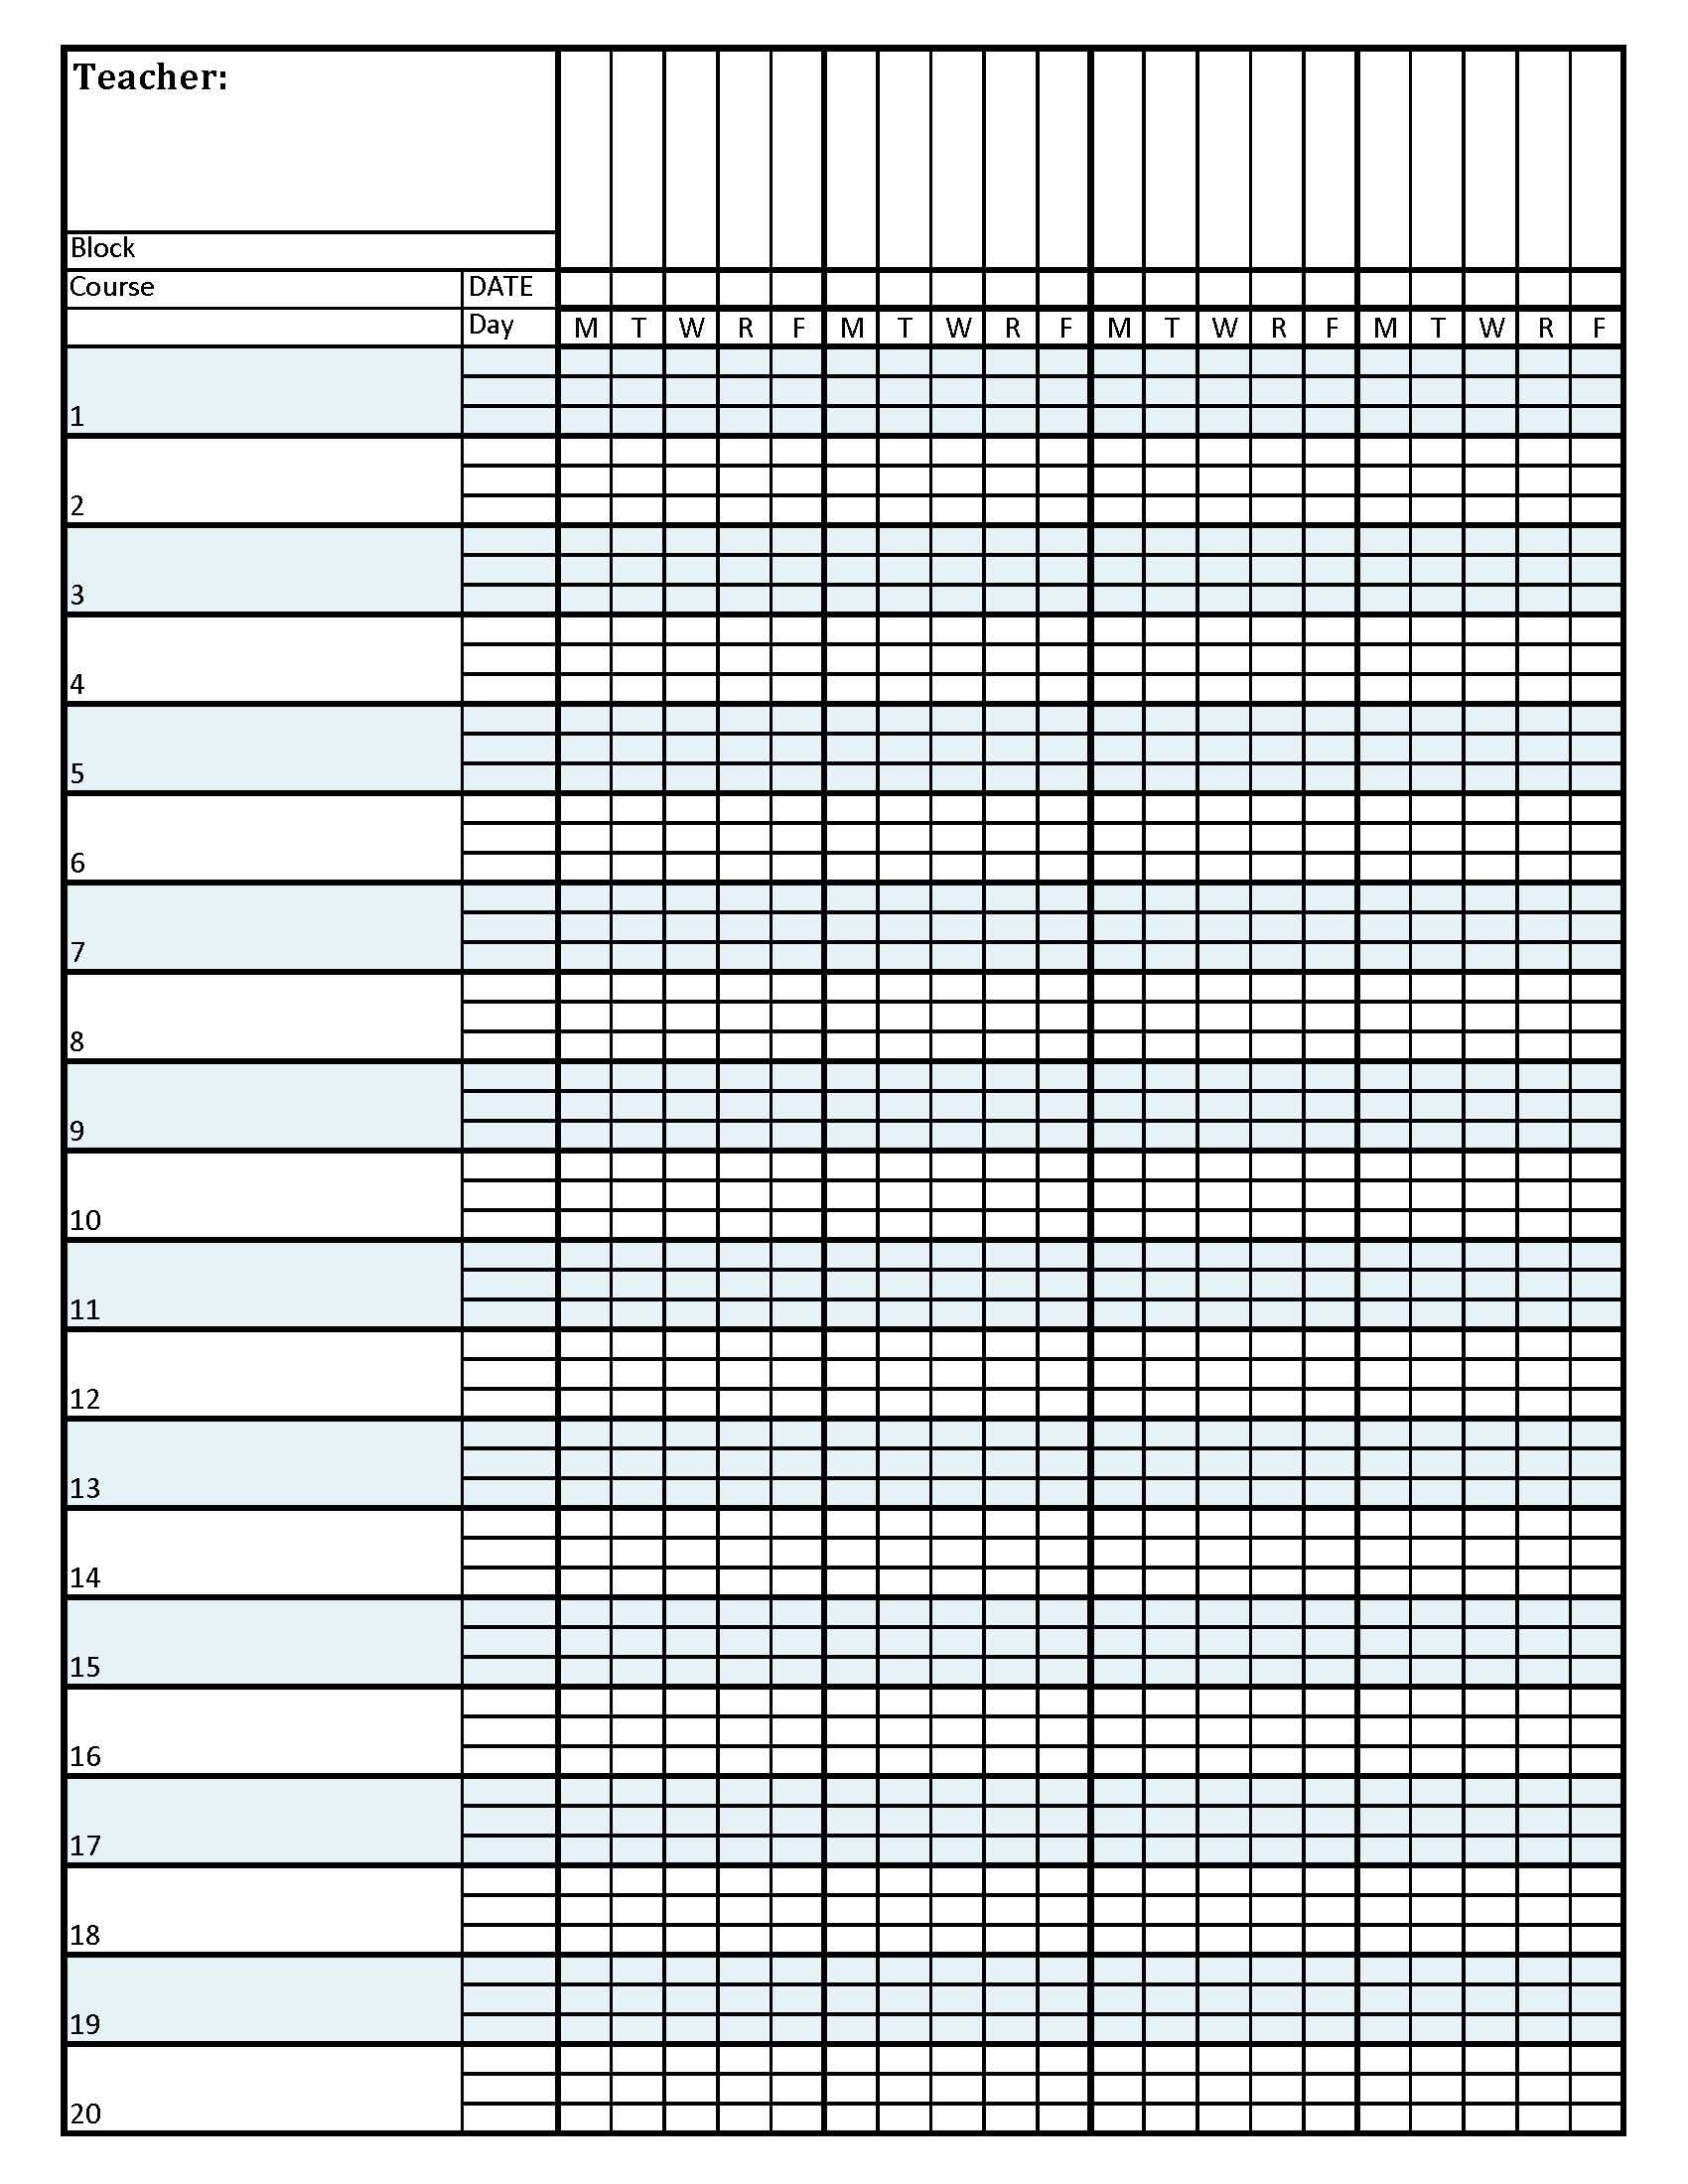 Grade Sheet Printable | Printable Gradebook | Sine Over Cosine Of - Free Printable Attendance Forms For Teachers